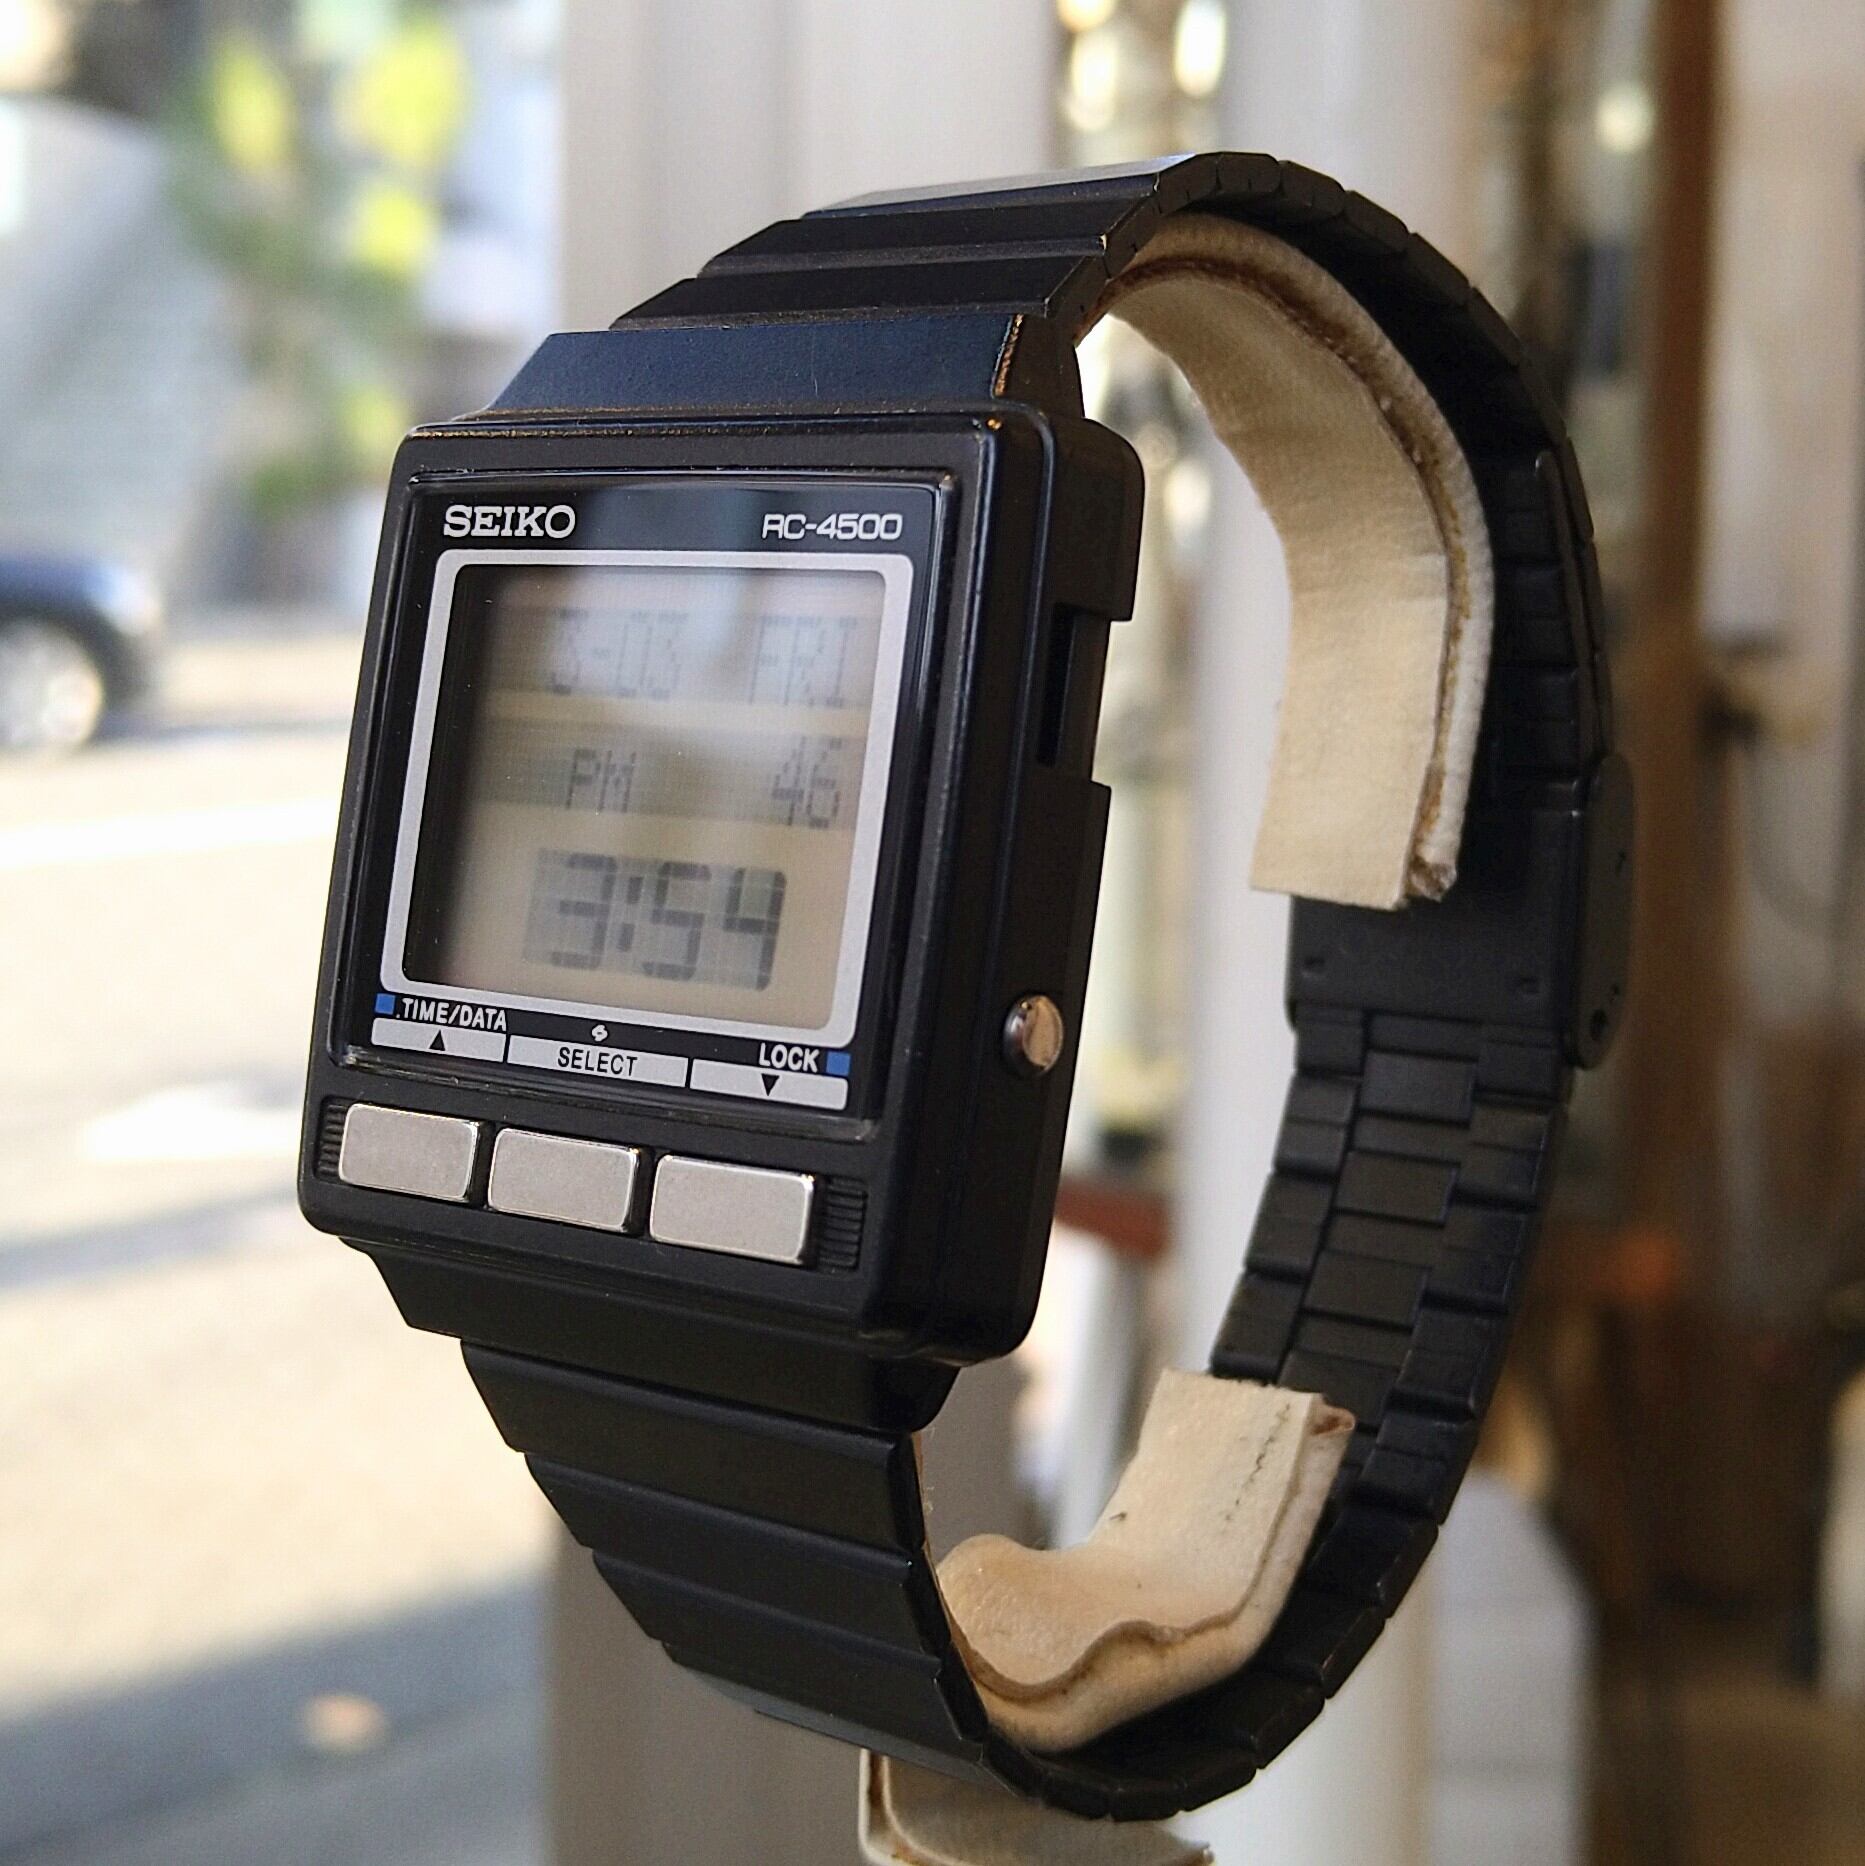 SEIKO RC-4500 | watchshop L